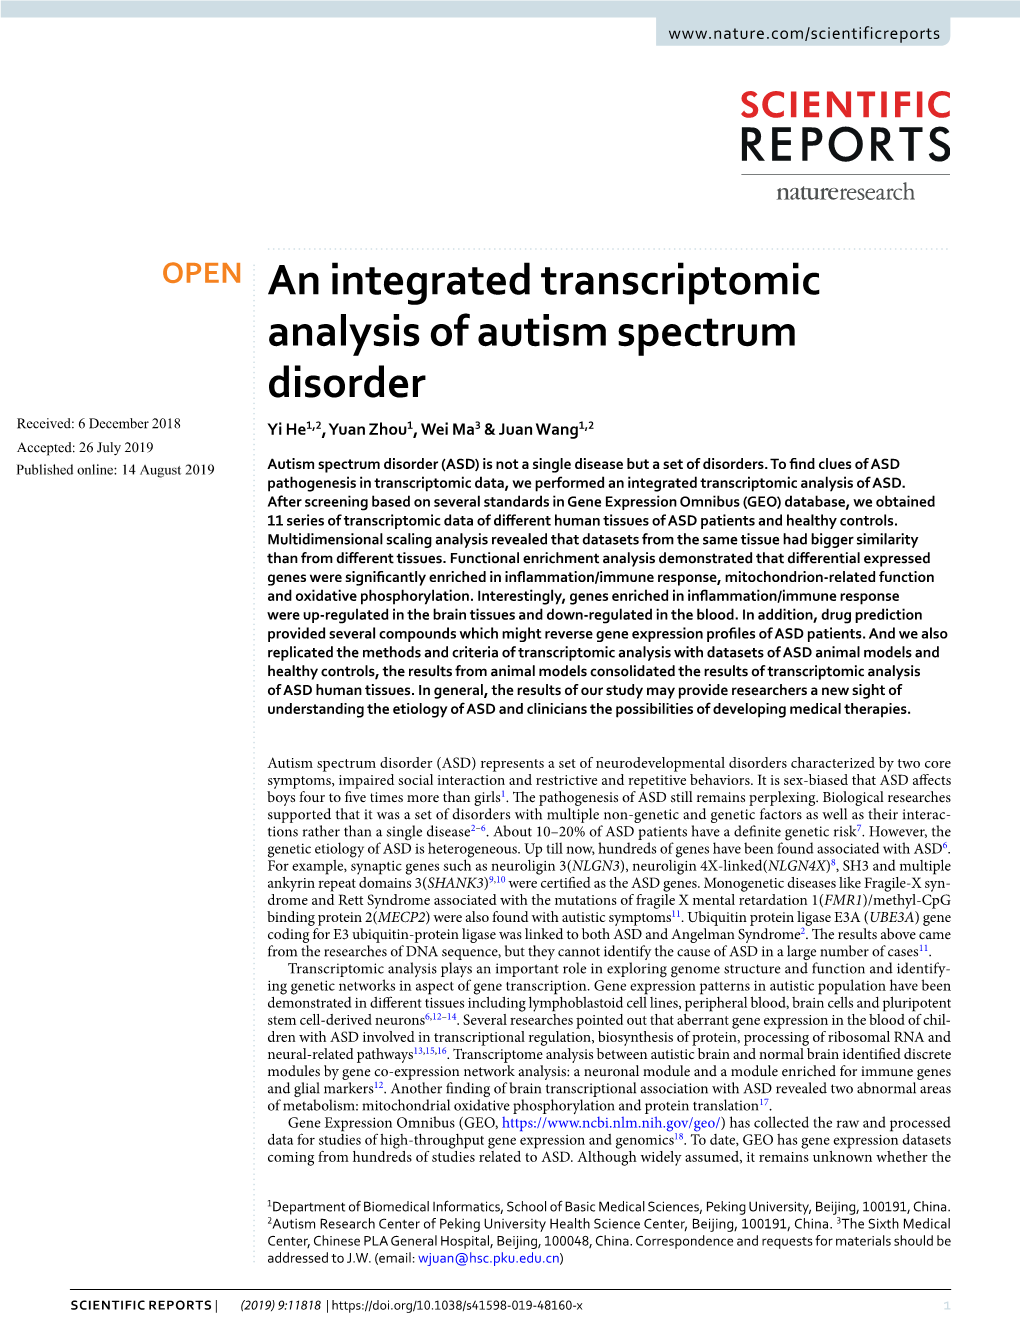 An Integrated Transcriptomic Analysis of Autism Spectrum Disorder